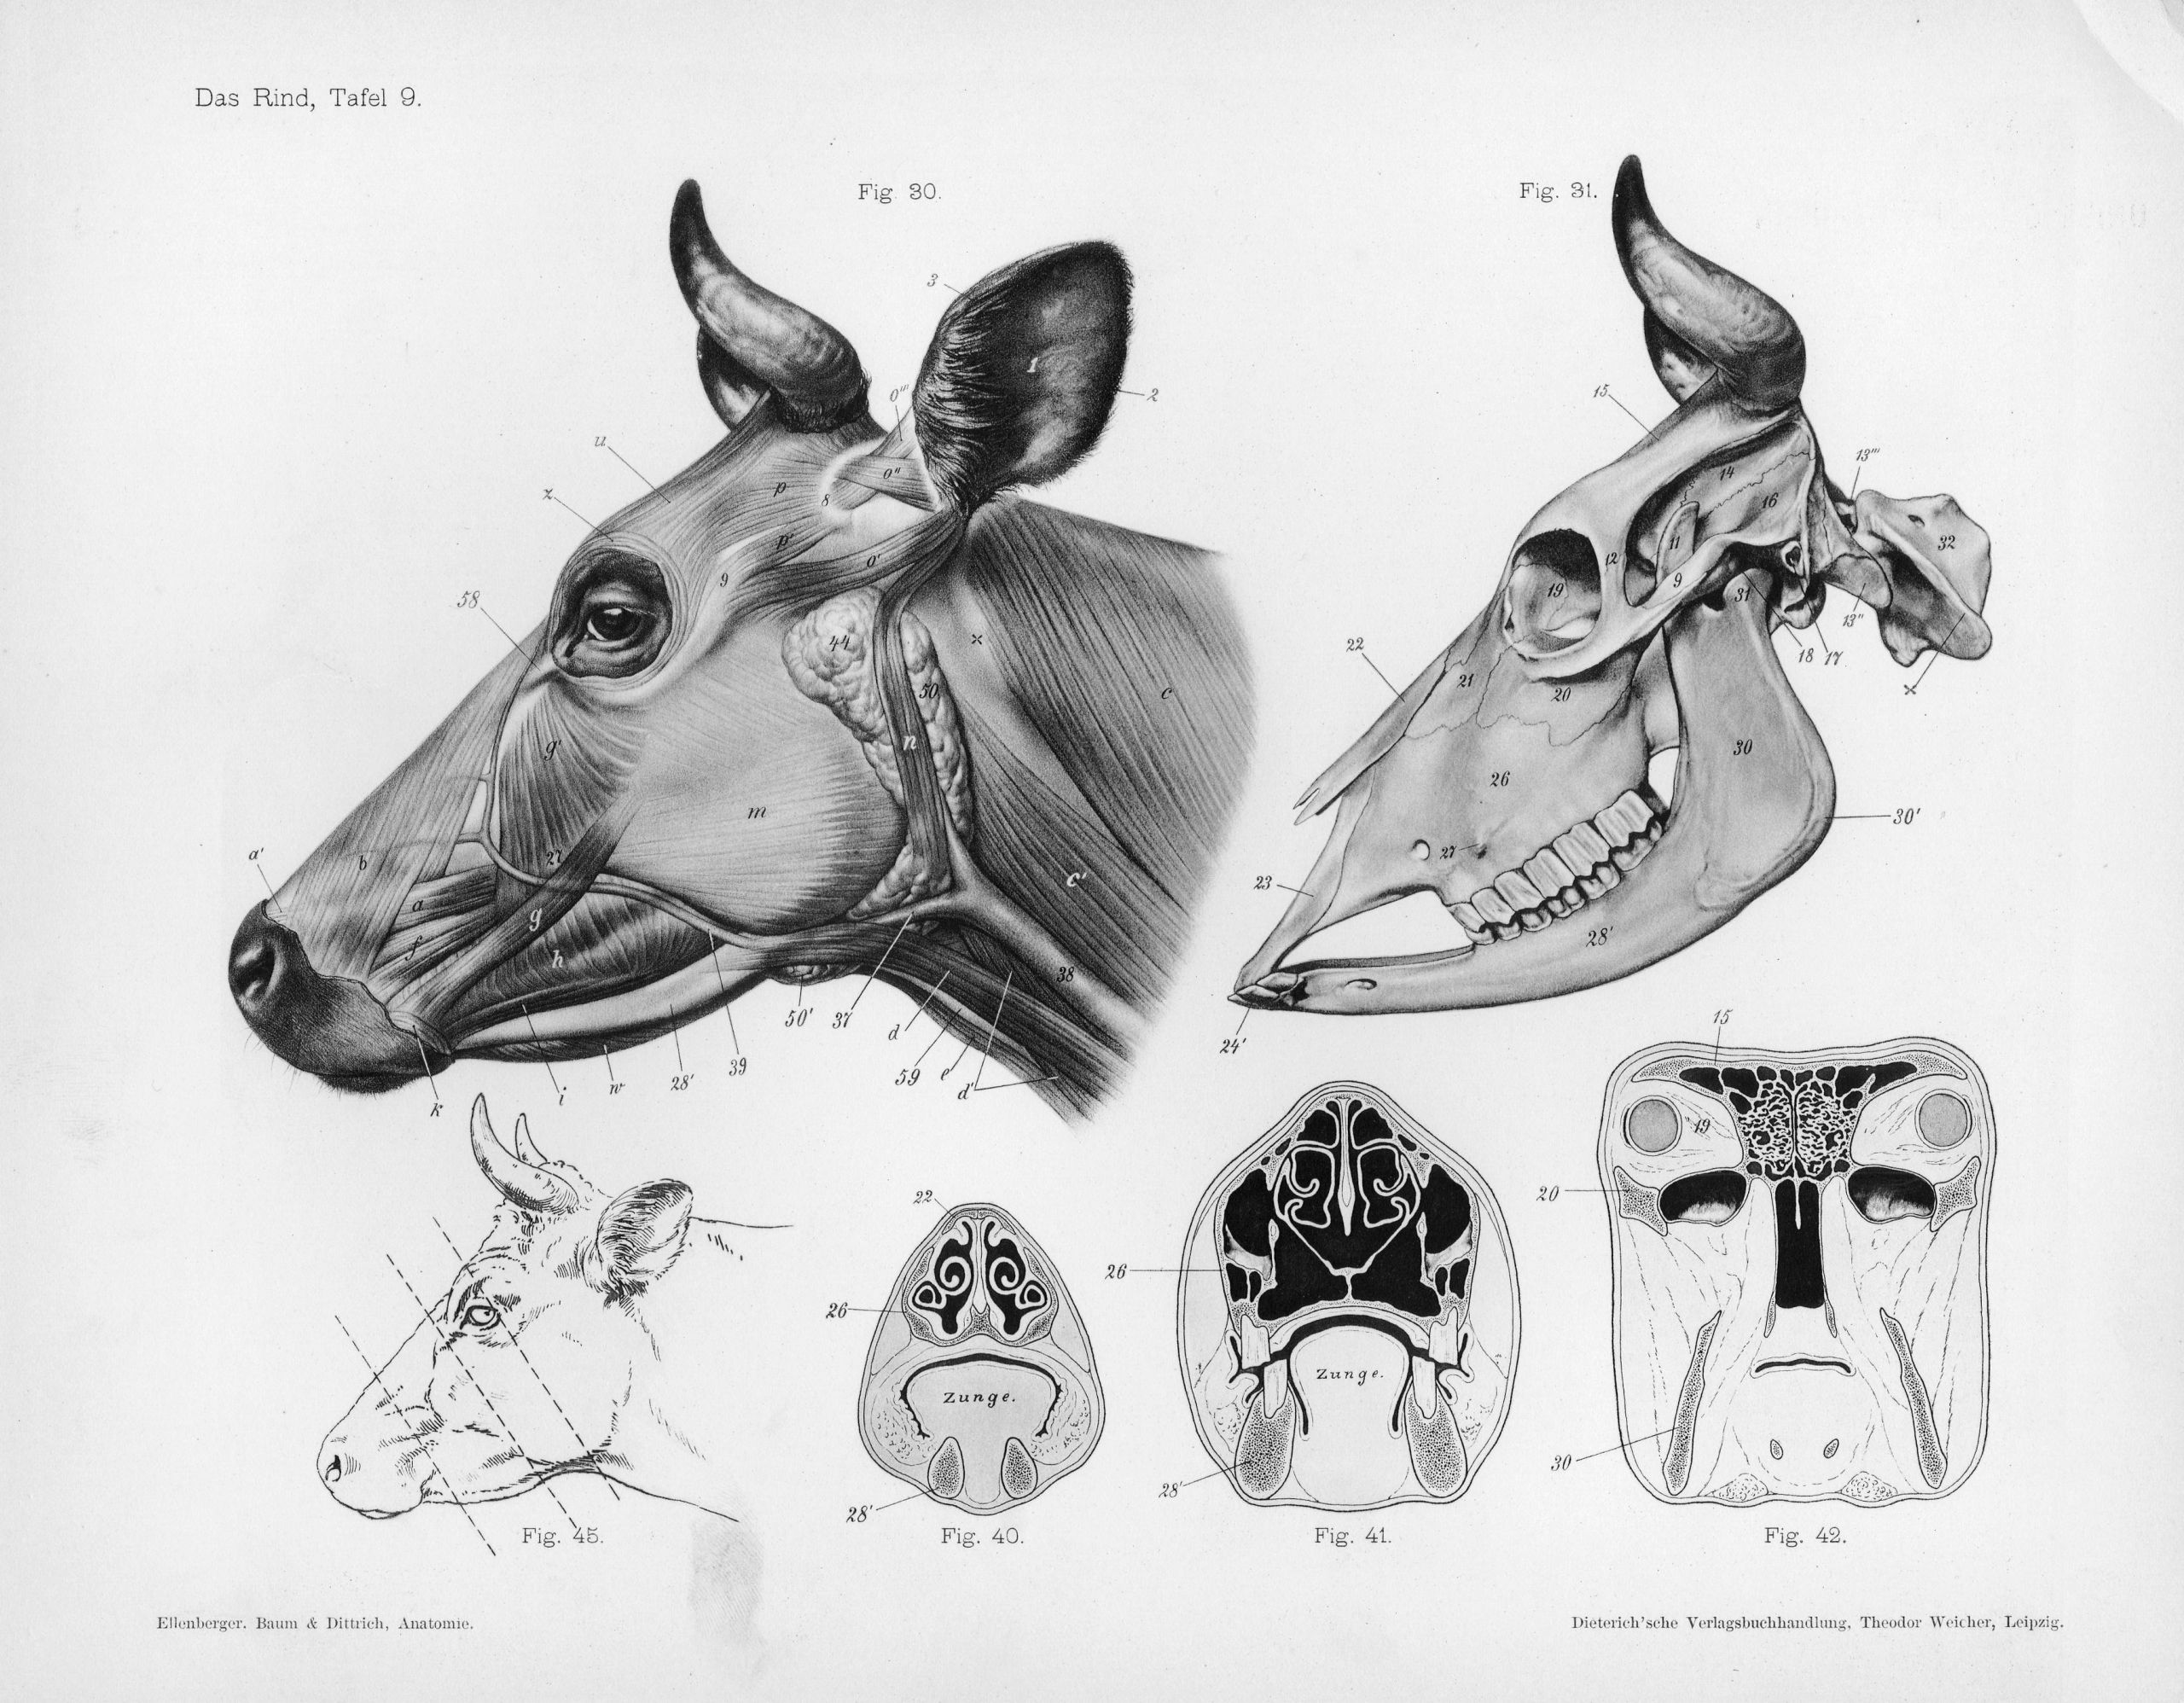 Cow anatomy